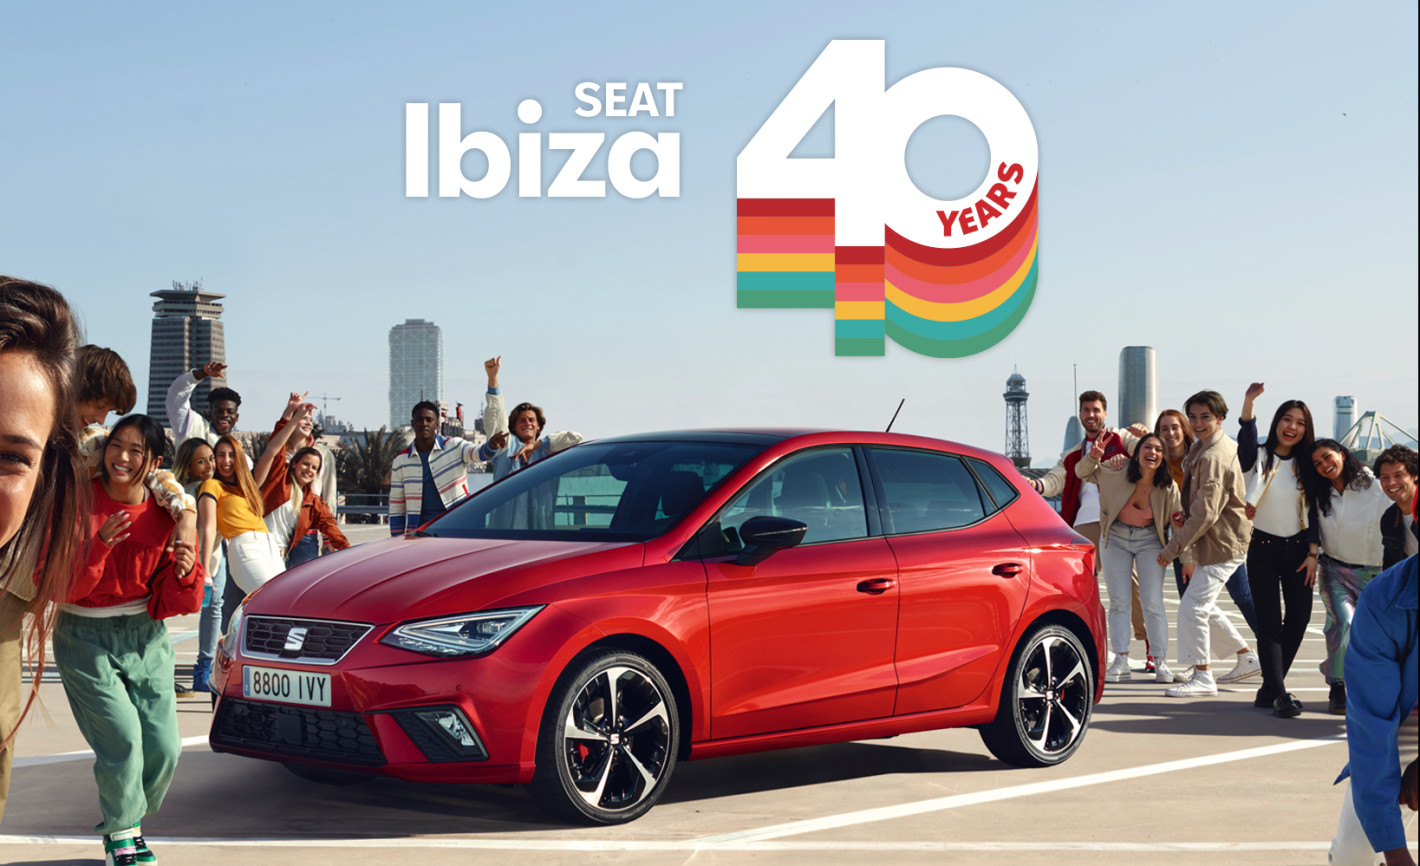 SEAT Ibiza 40 ans